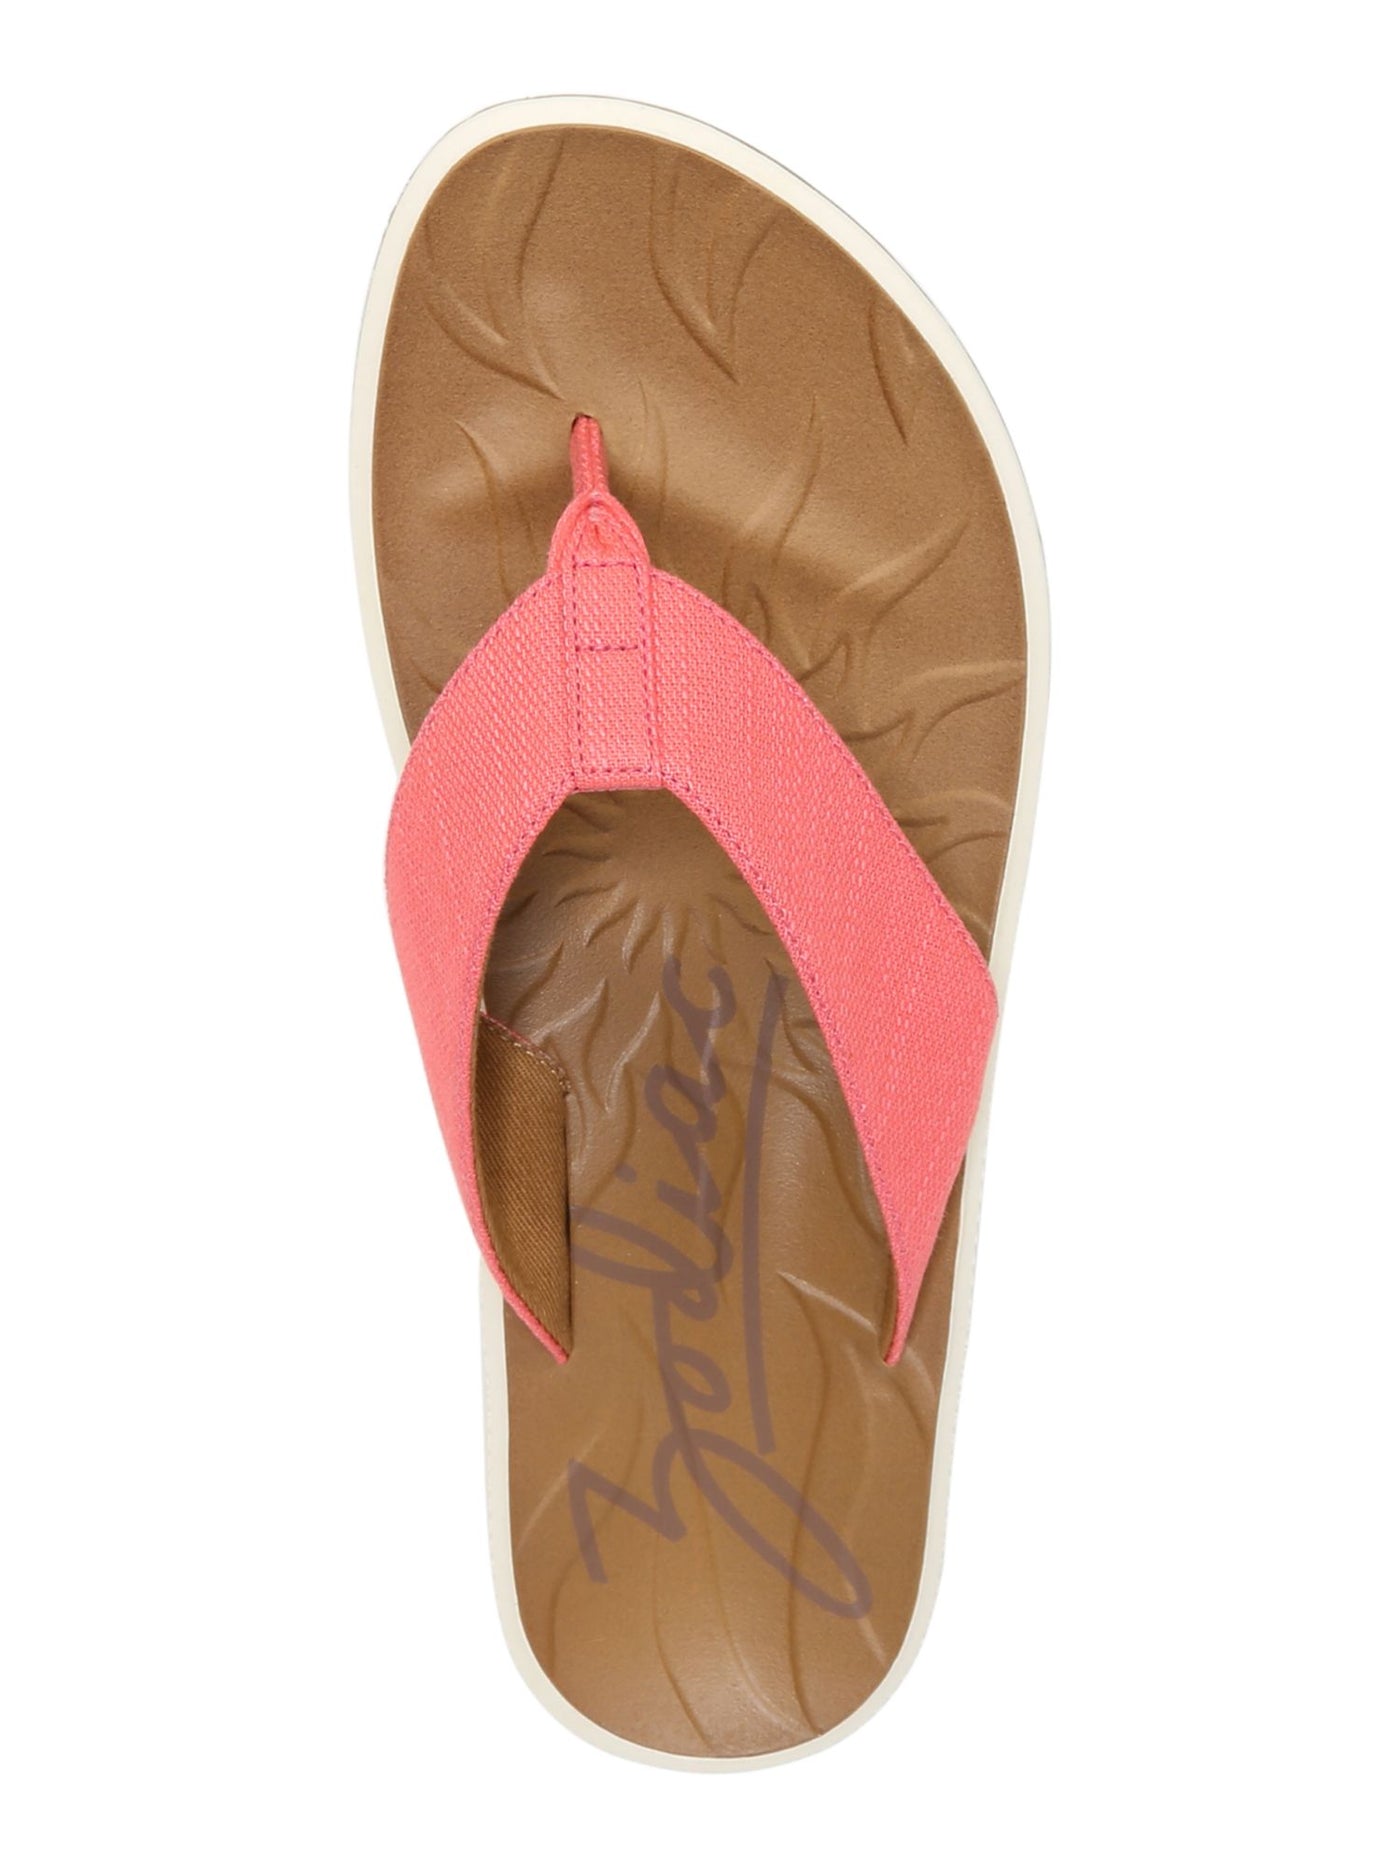 ZODIAC Womens Pink 1/2" Platform Comfort Sunny Round Toe Wedge Slip On Flip Flop Sandal 8 M